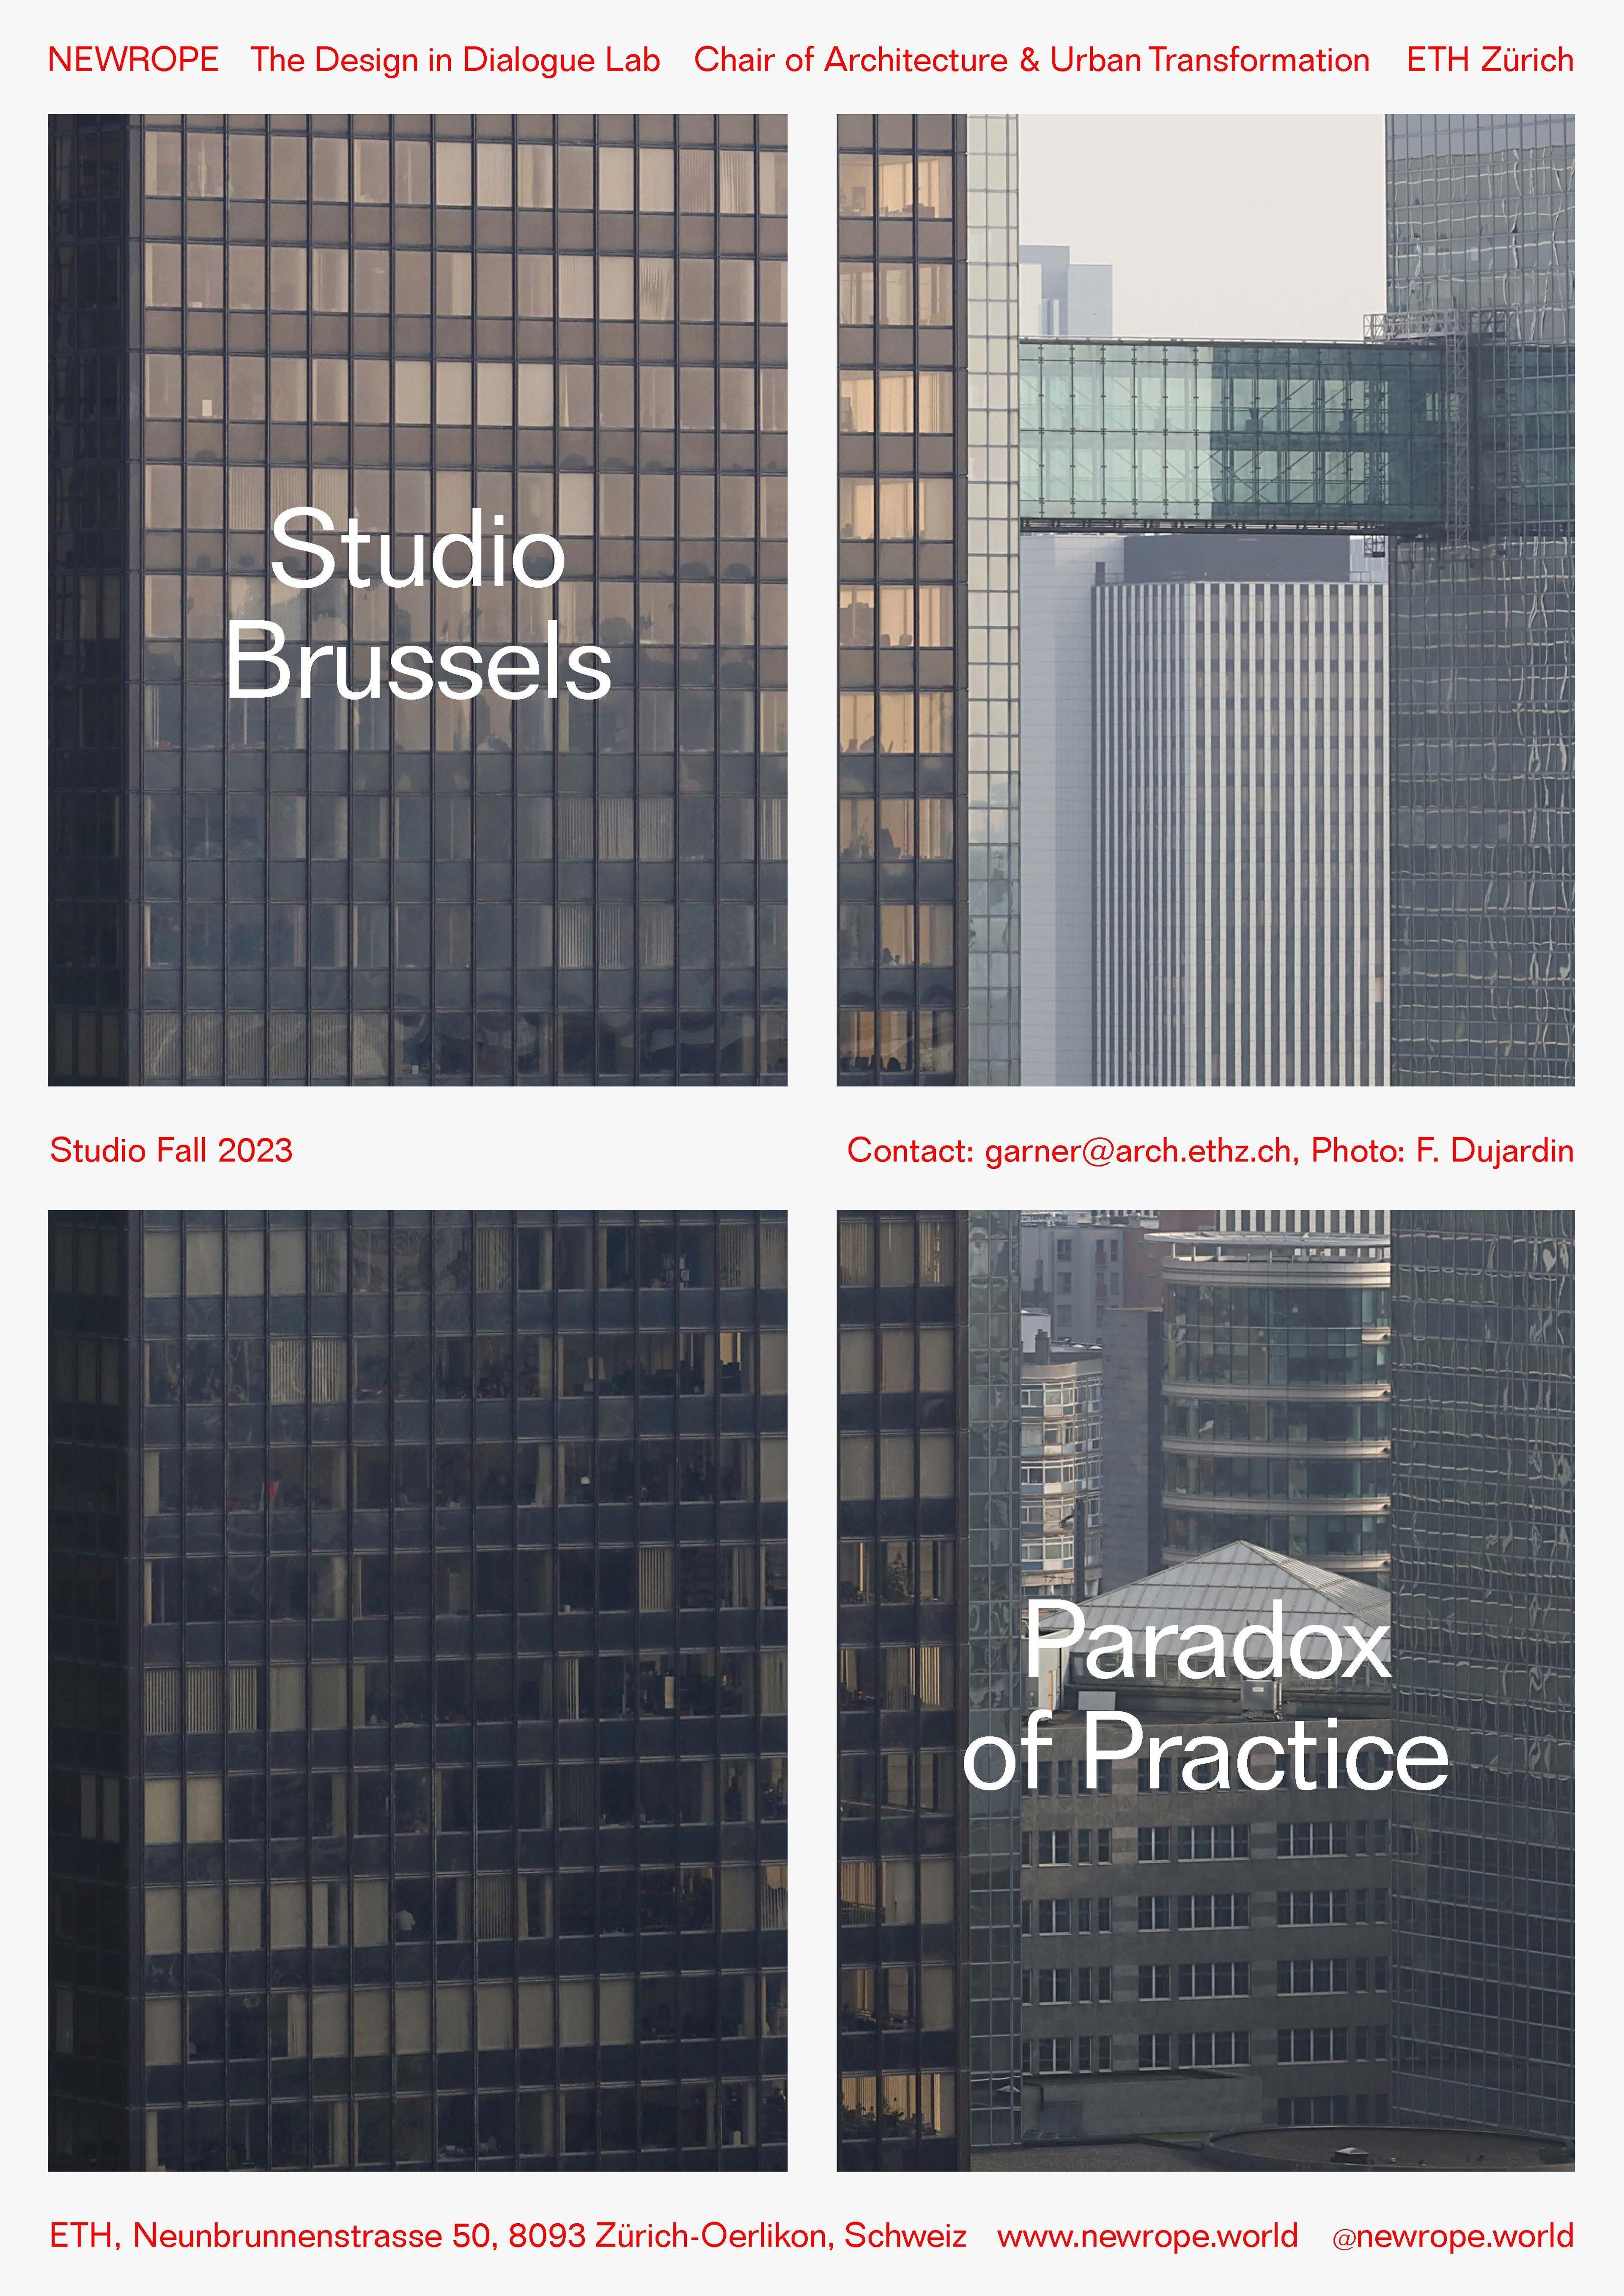 Announcement: Studio Brussels – Paradox of Practice